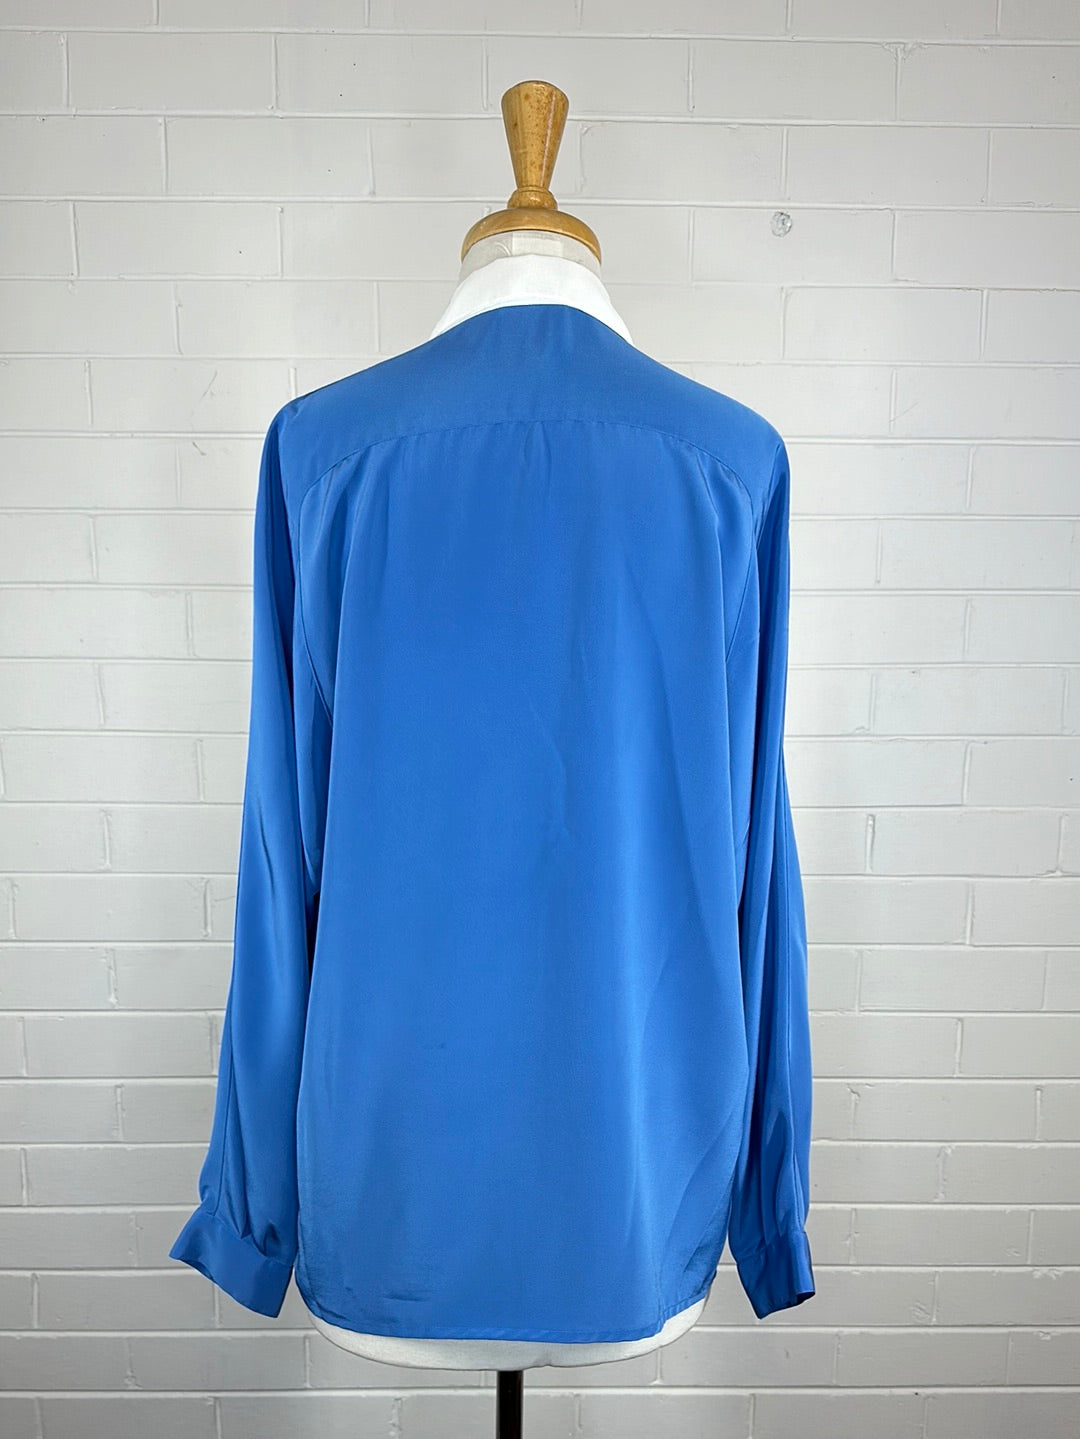 Jacques Vert | London | vintage 80's | shirt | size 14 | long sleeve